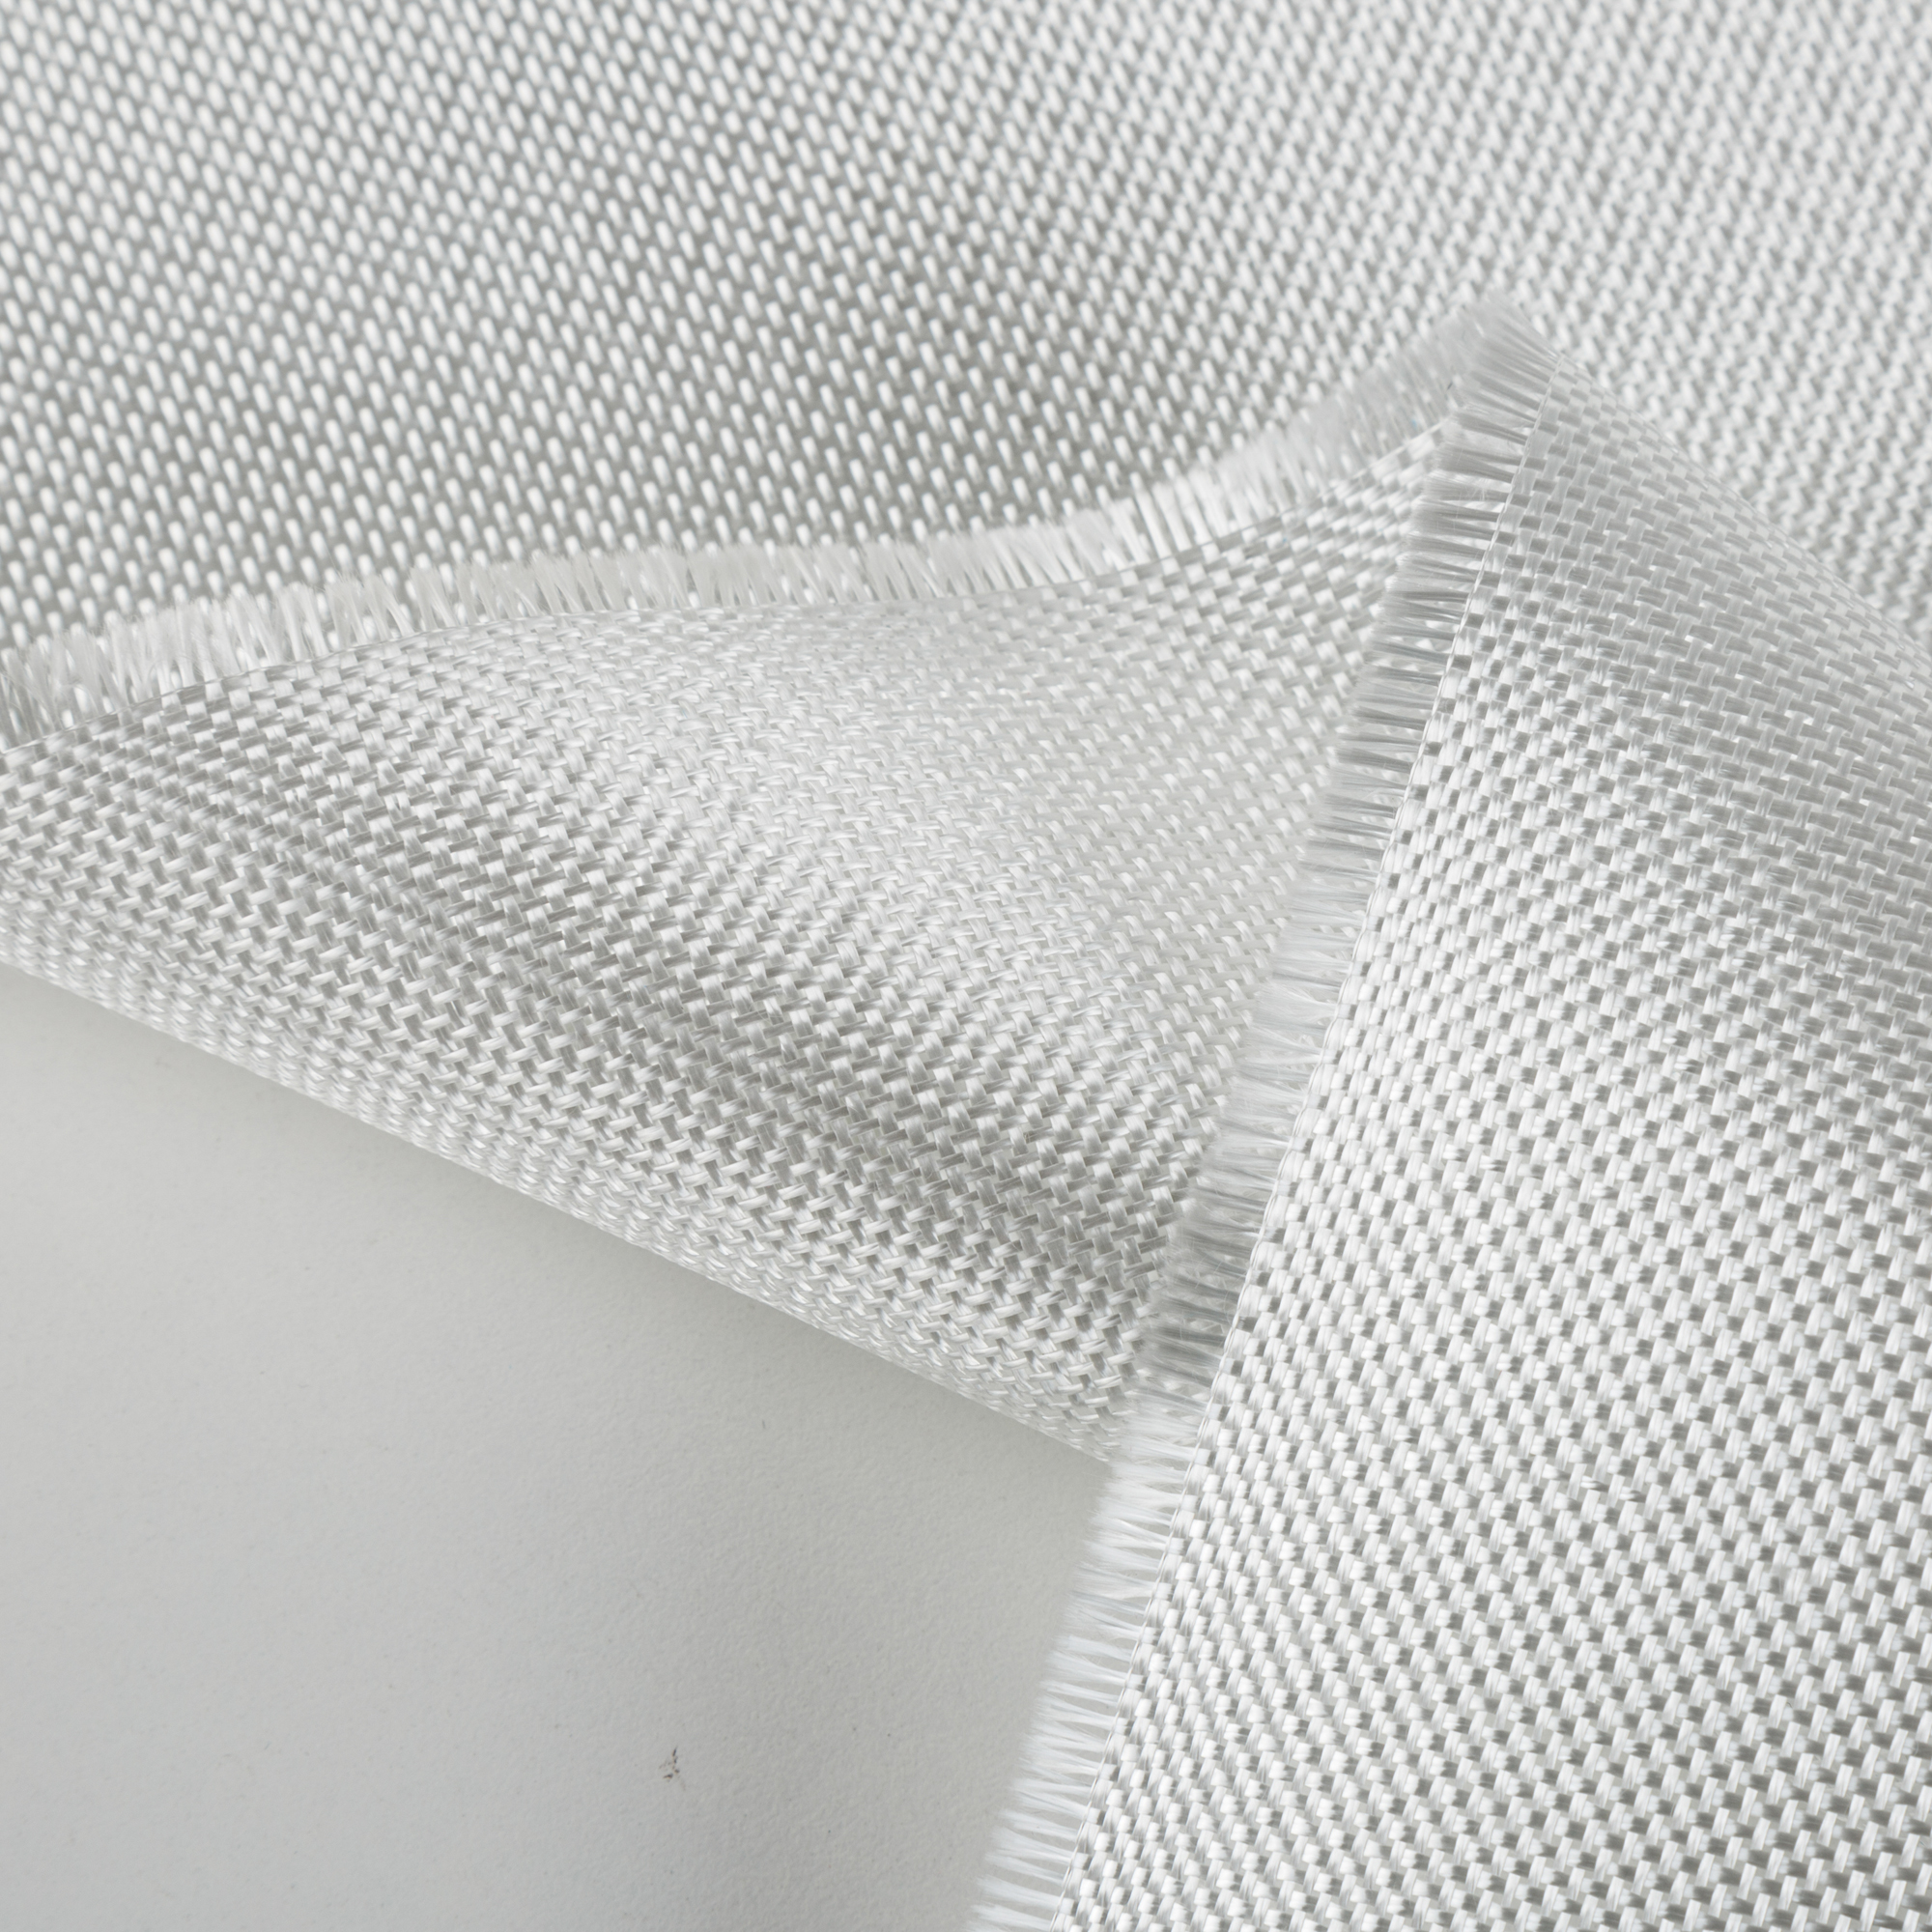 E glass plain weave reinforce 4oz 100g fiber glass cloth for boats surfboards